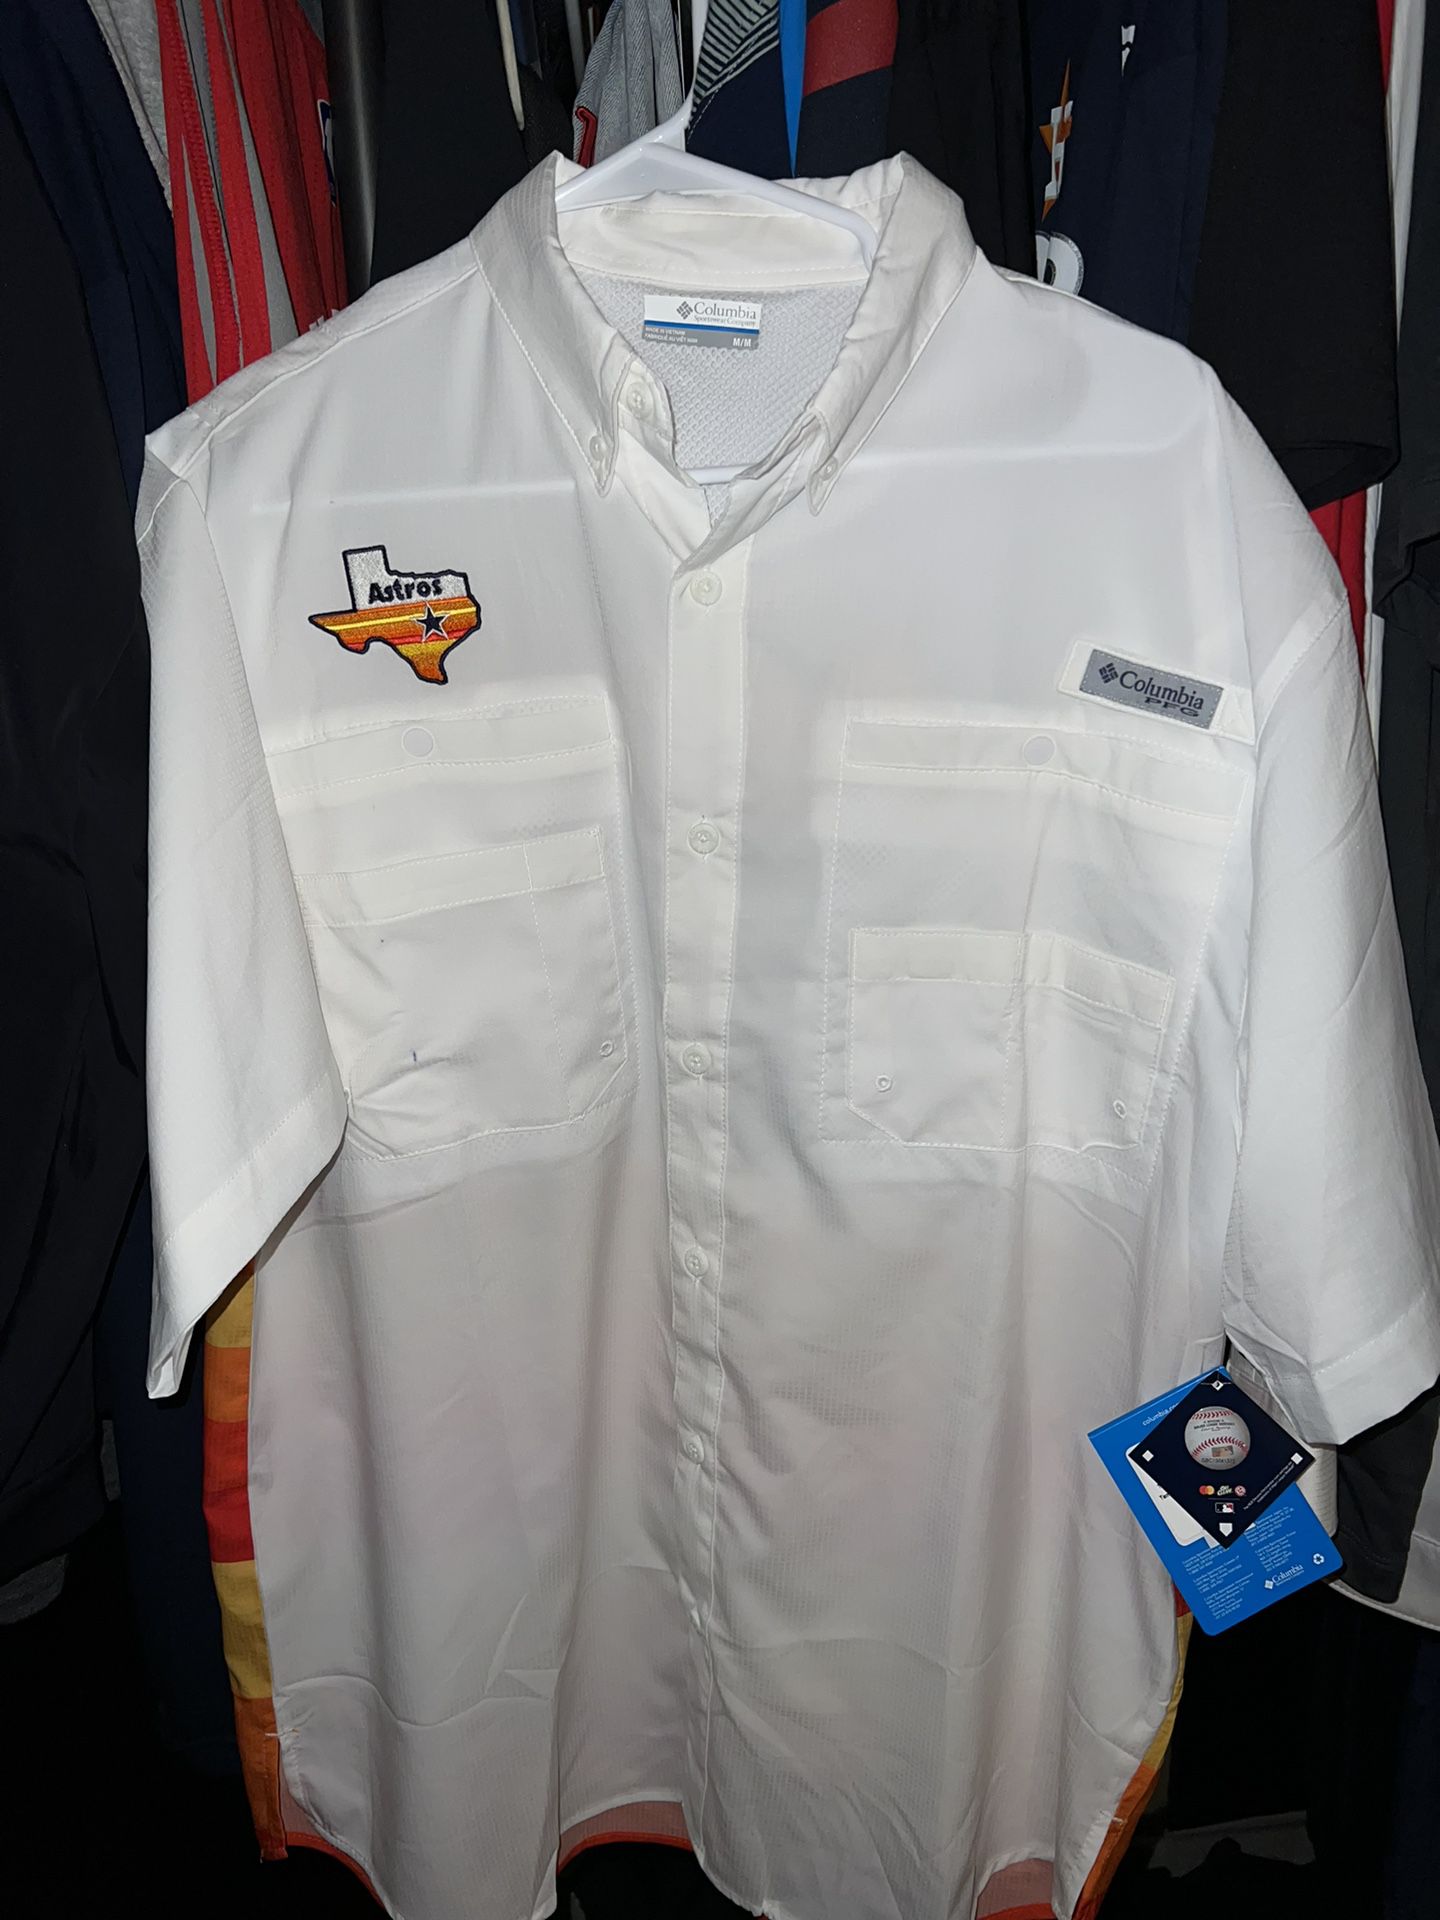 Houston Astros Columbia Fishing shirt medium for Sale in Houston